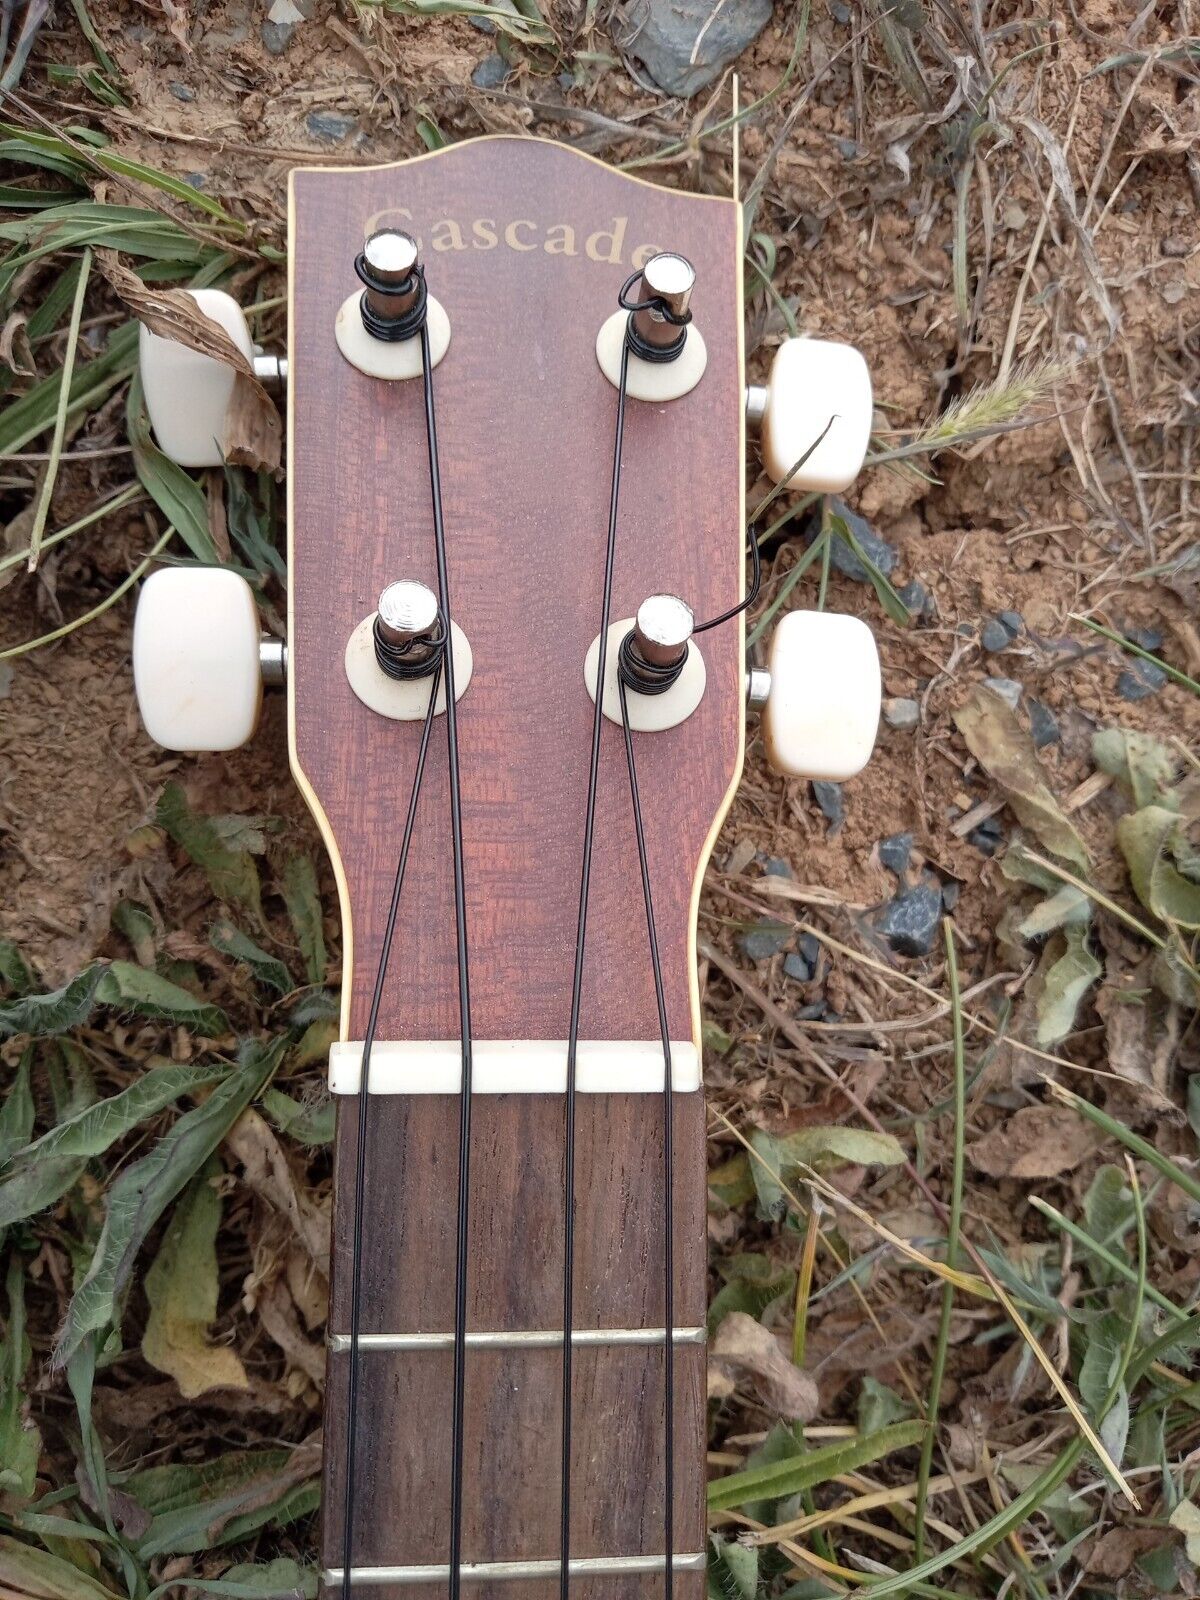 Cascade MOUNTAIN Acoustic UKULELE HIKER TREK CAMPER AP TRAIL Guitar SOFT CASE. 4